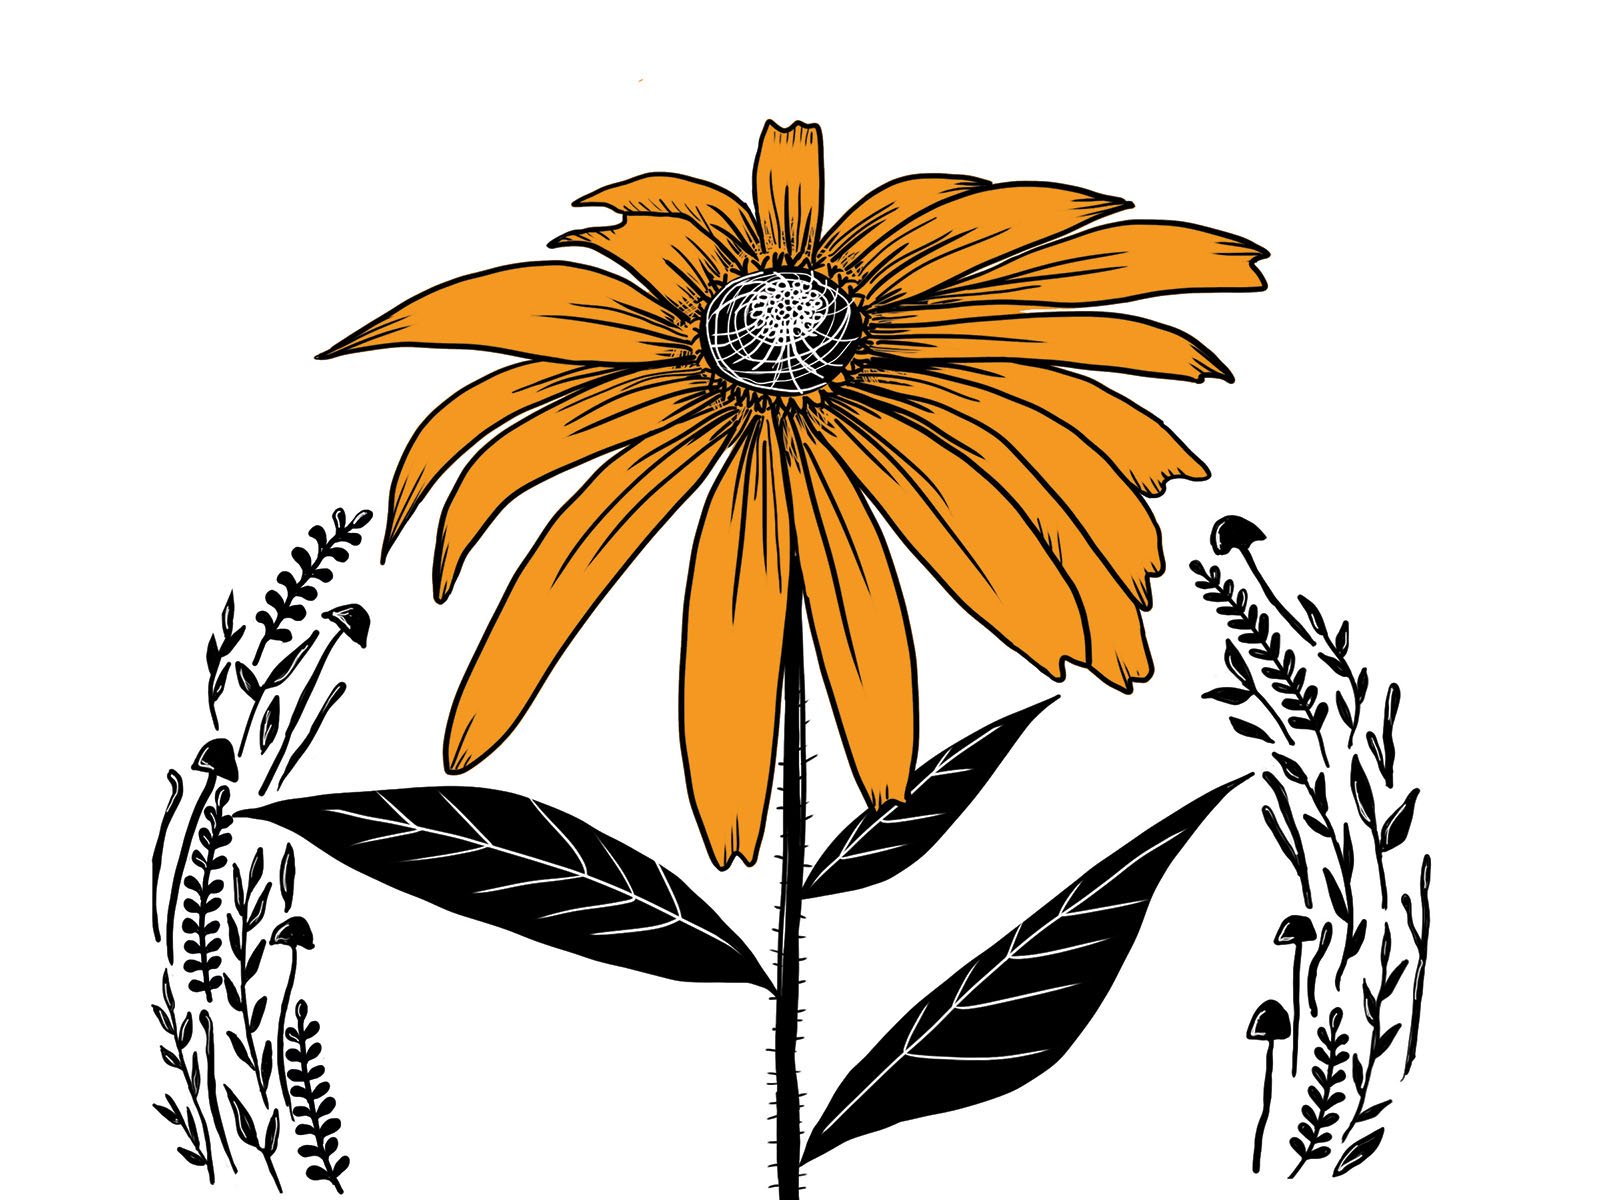 wine-label-flower-Ratbee-Press-graphic-design-example.jpg